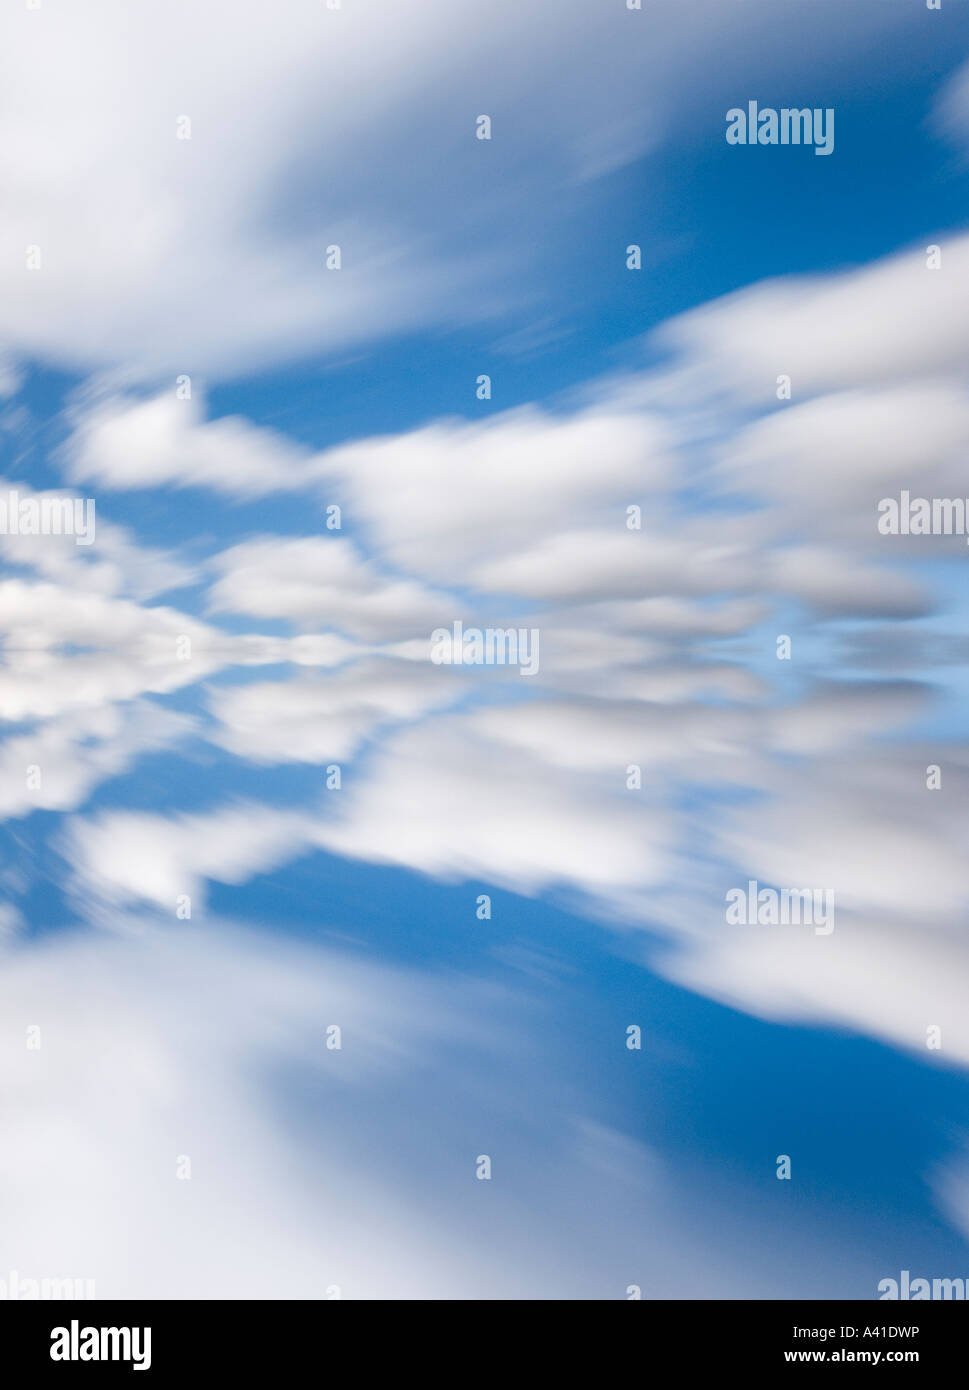 treibenden Wolken digital verändert Stockfoto